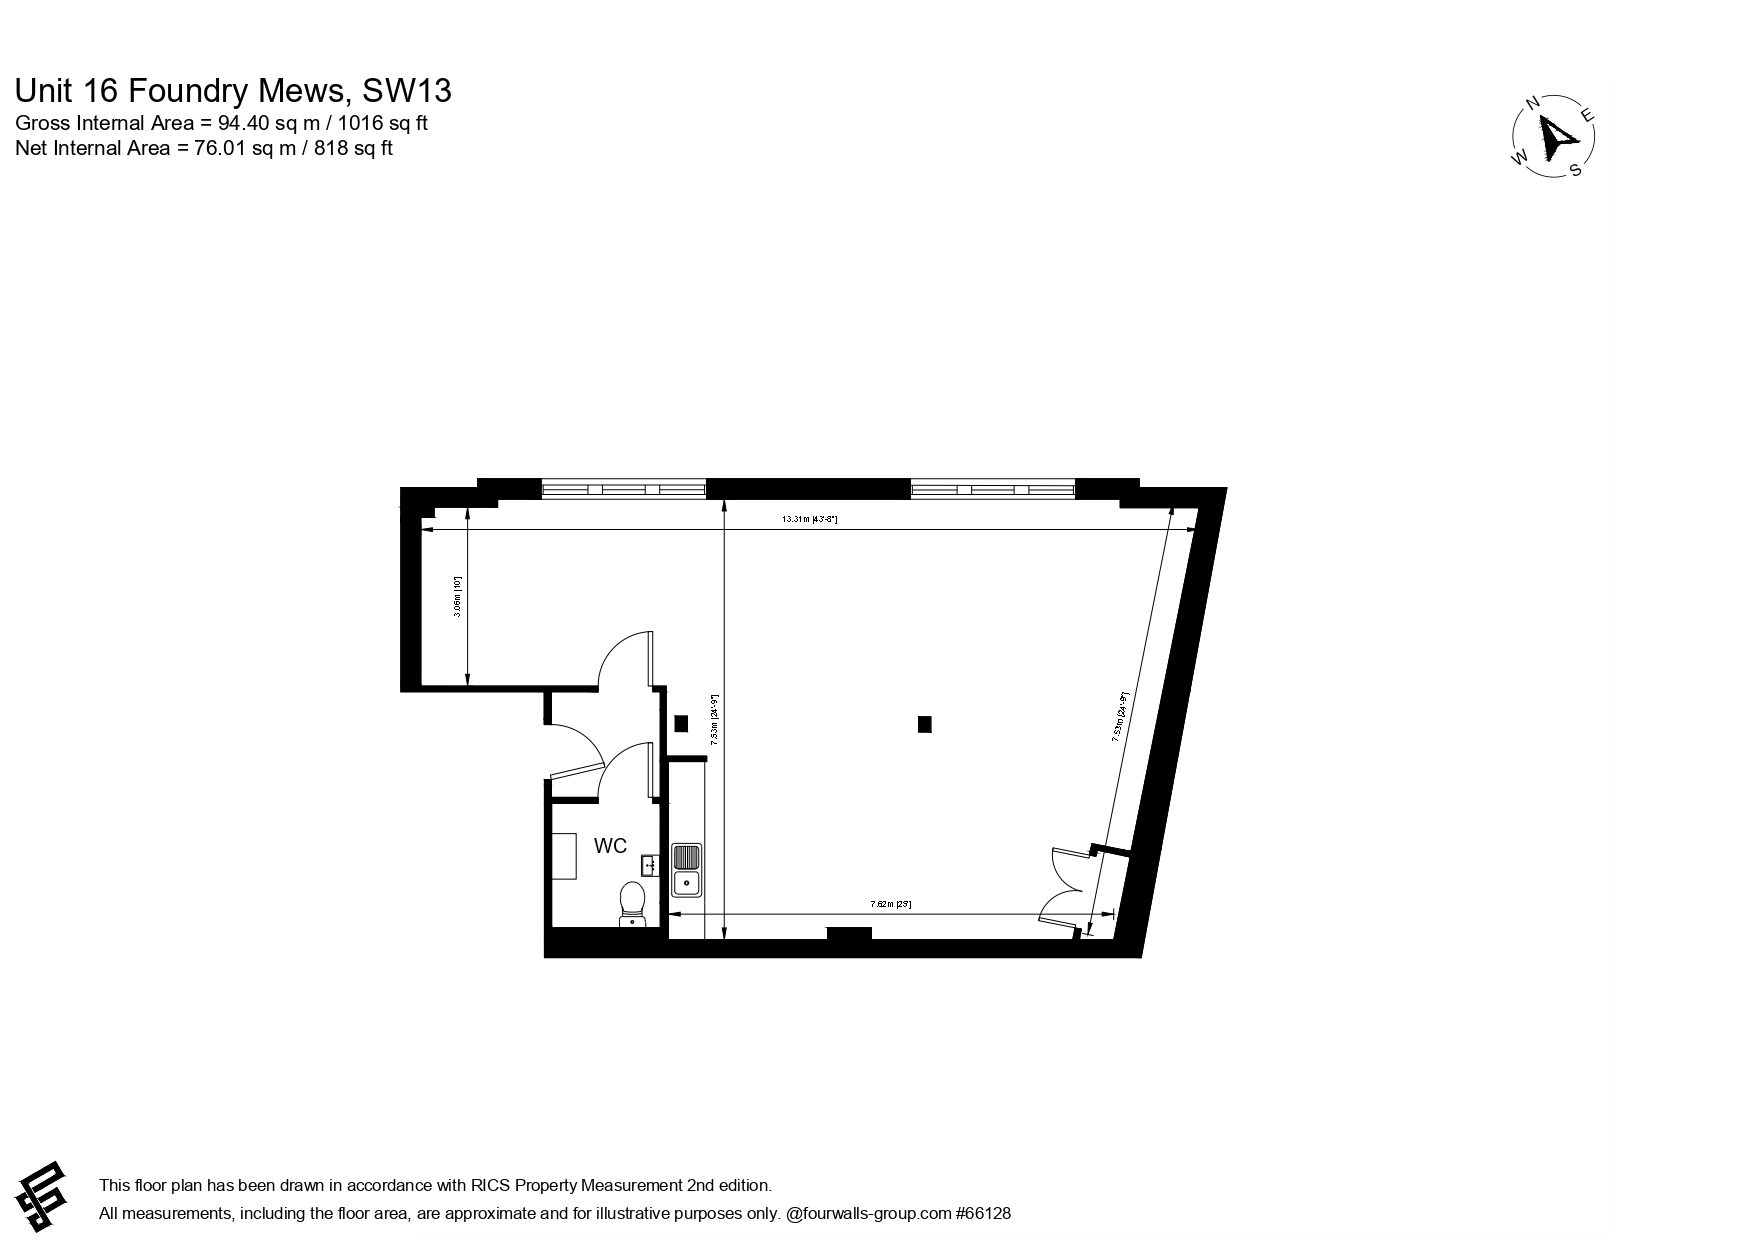 Unit 16 NIA floorplan page 0001